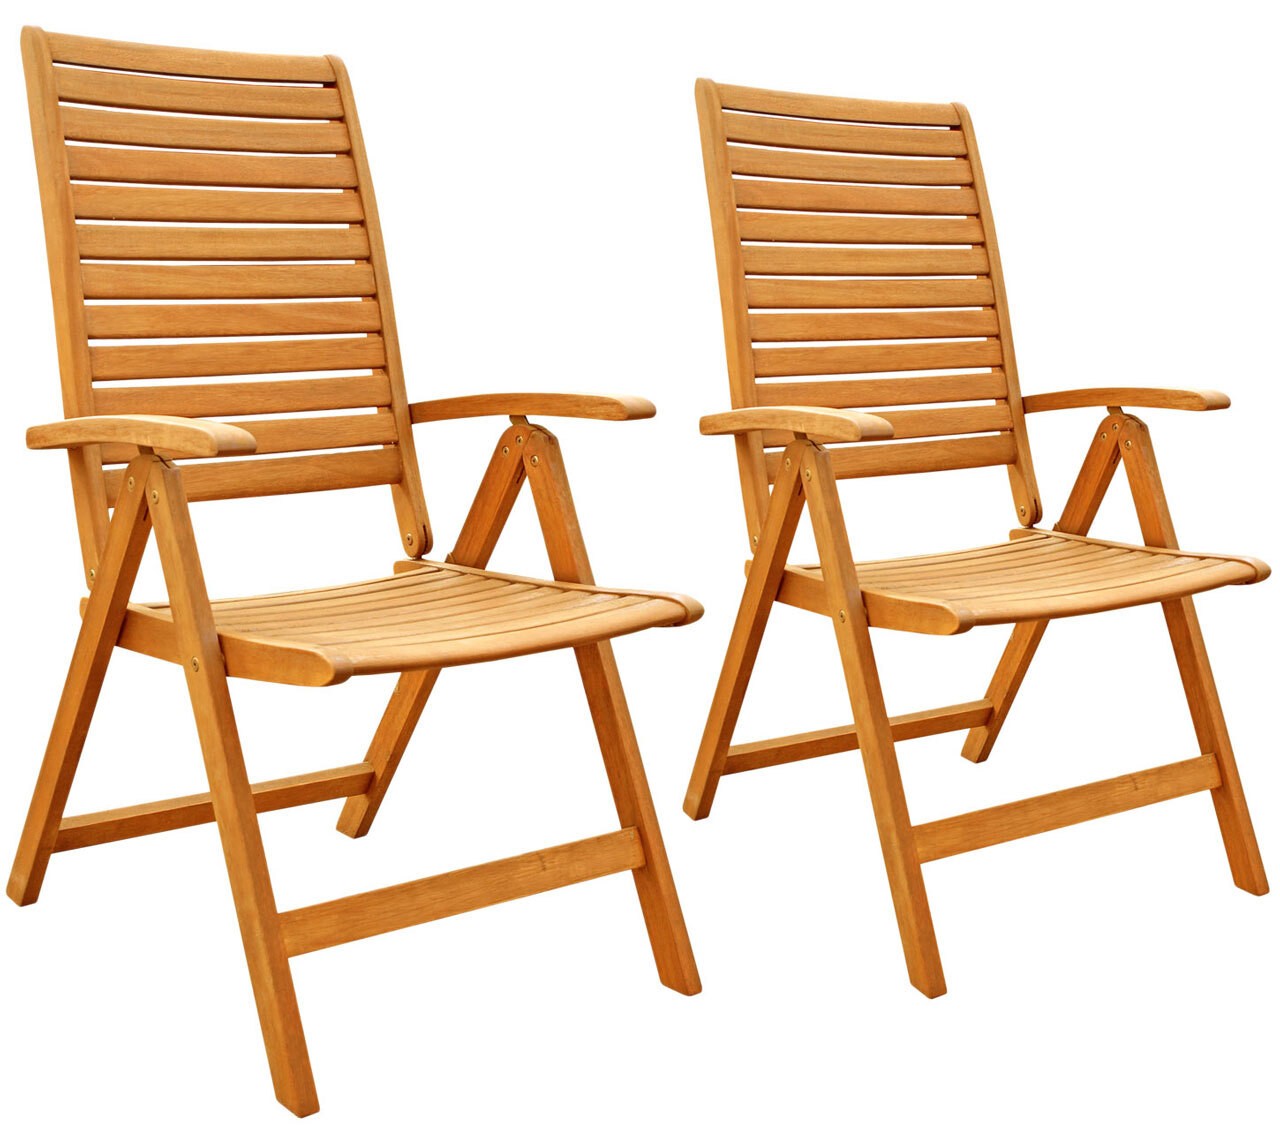 Outdoor Wooden Folding High Back Chair 